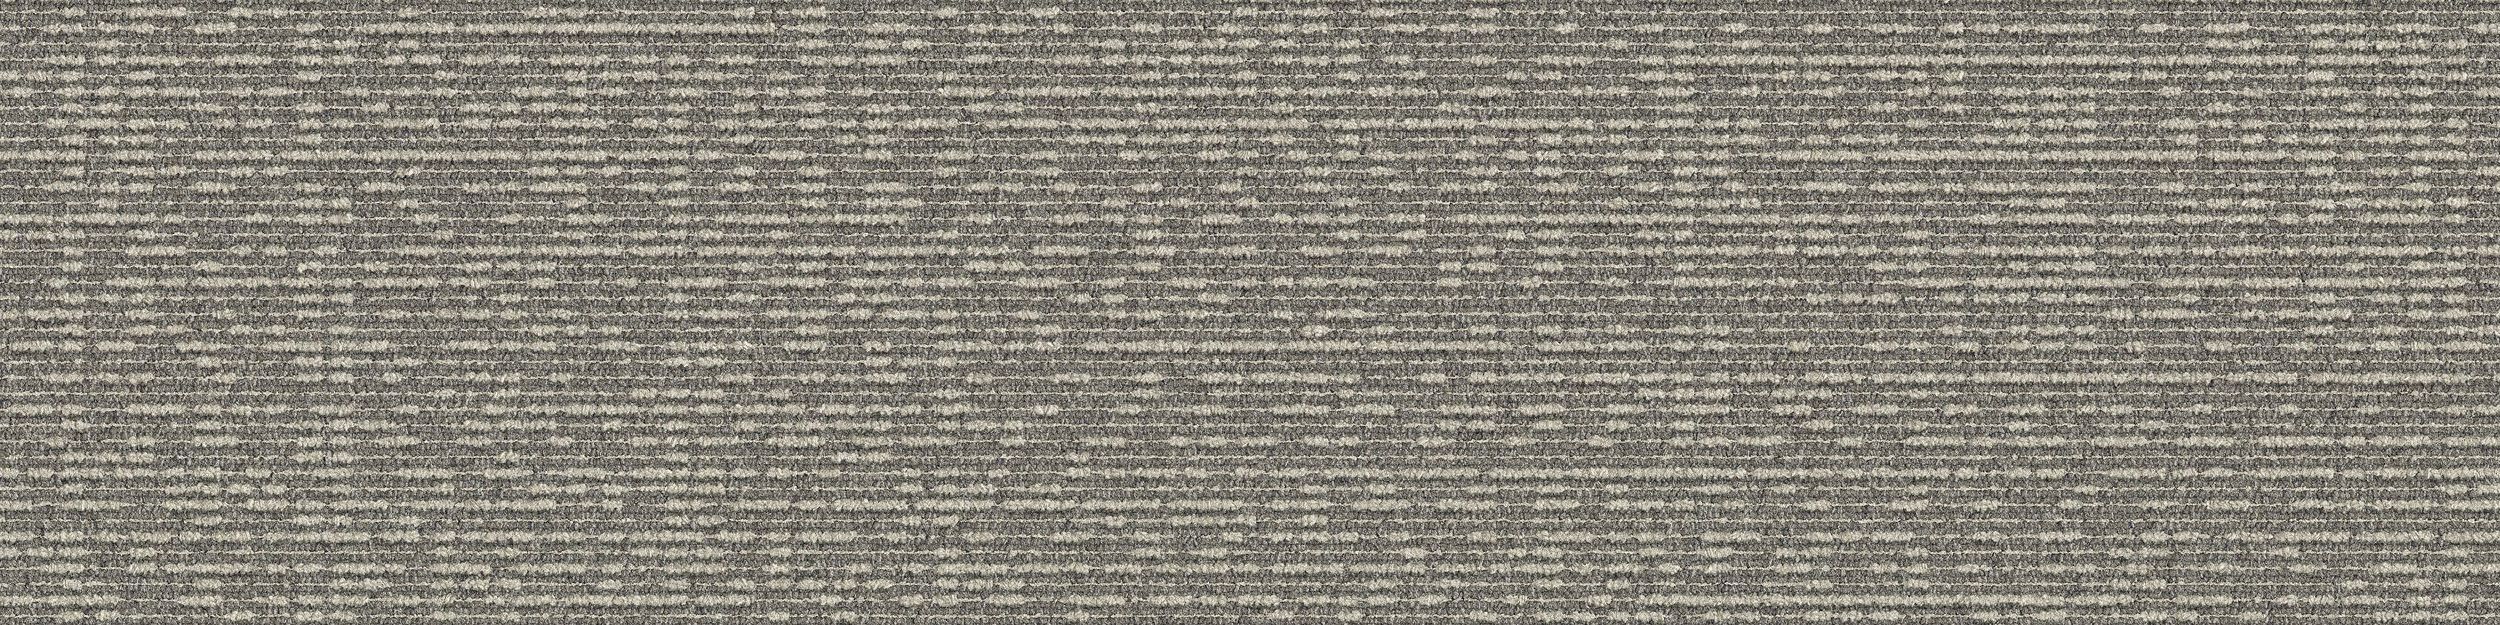 Sashiko Stitch Carpet Tile In Flint imagen número 2